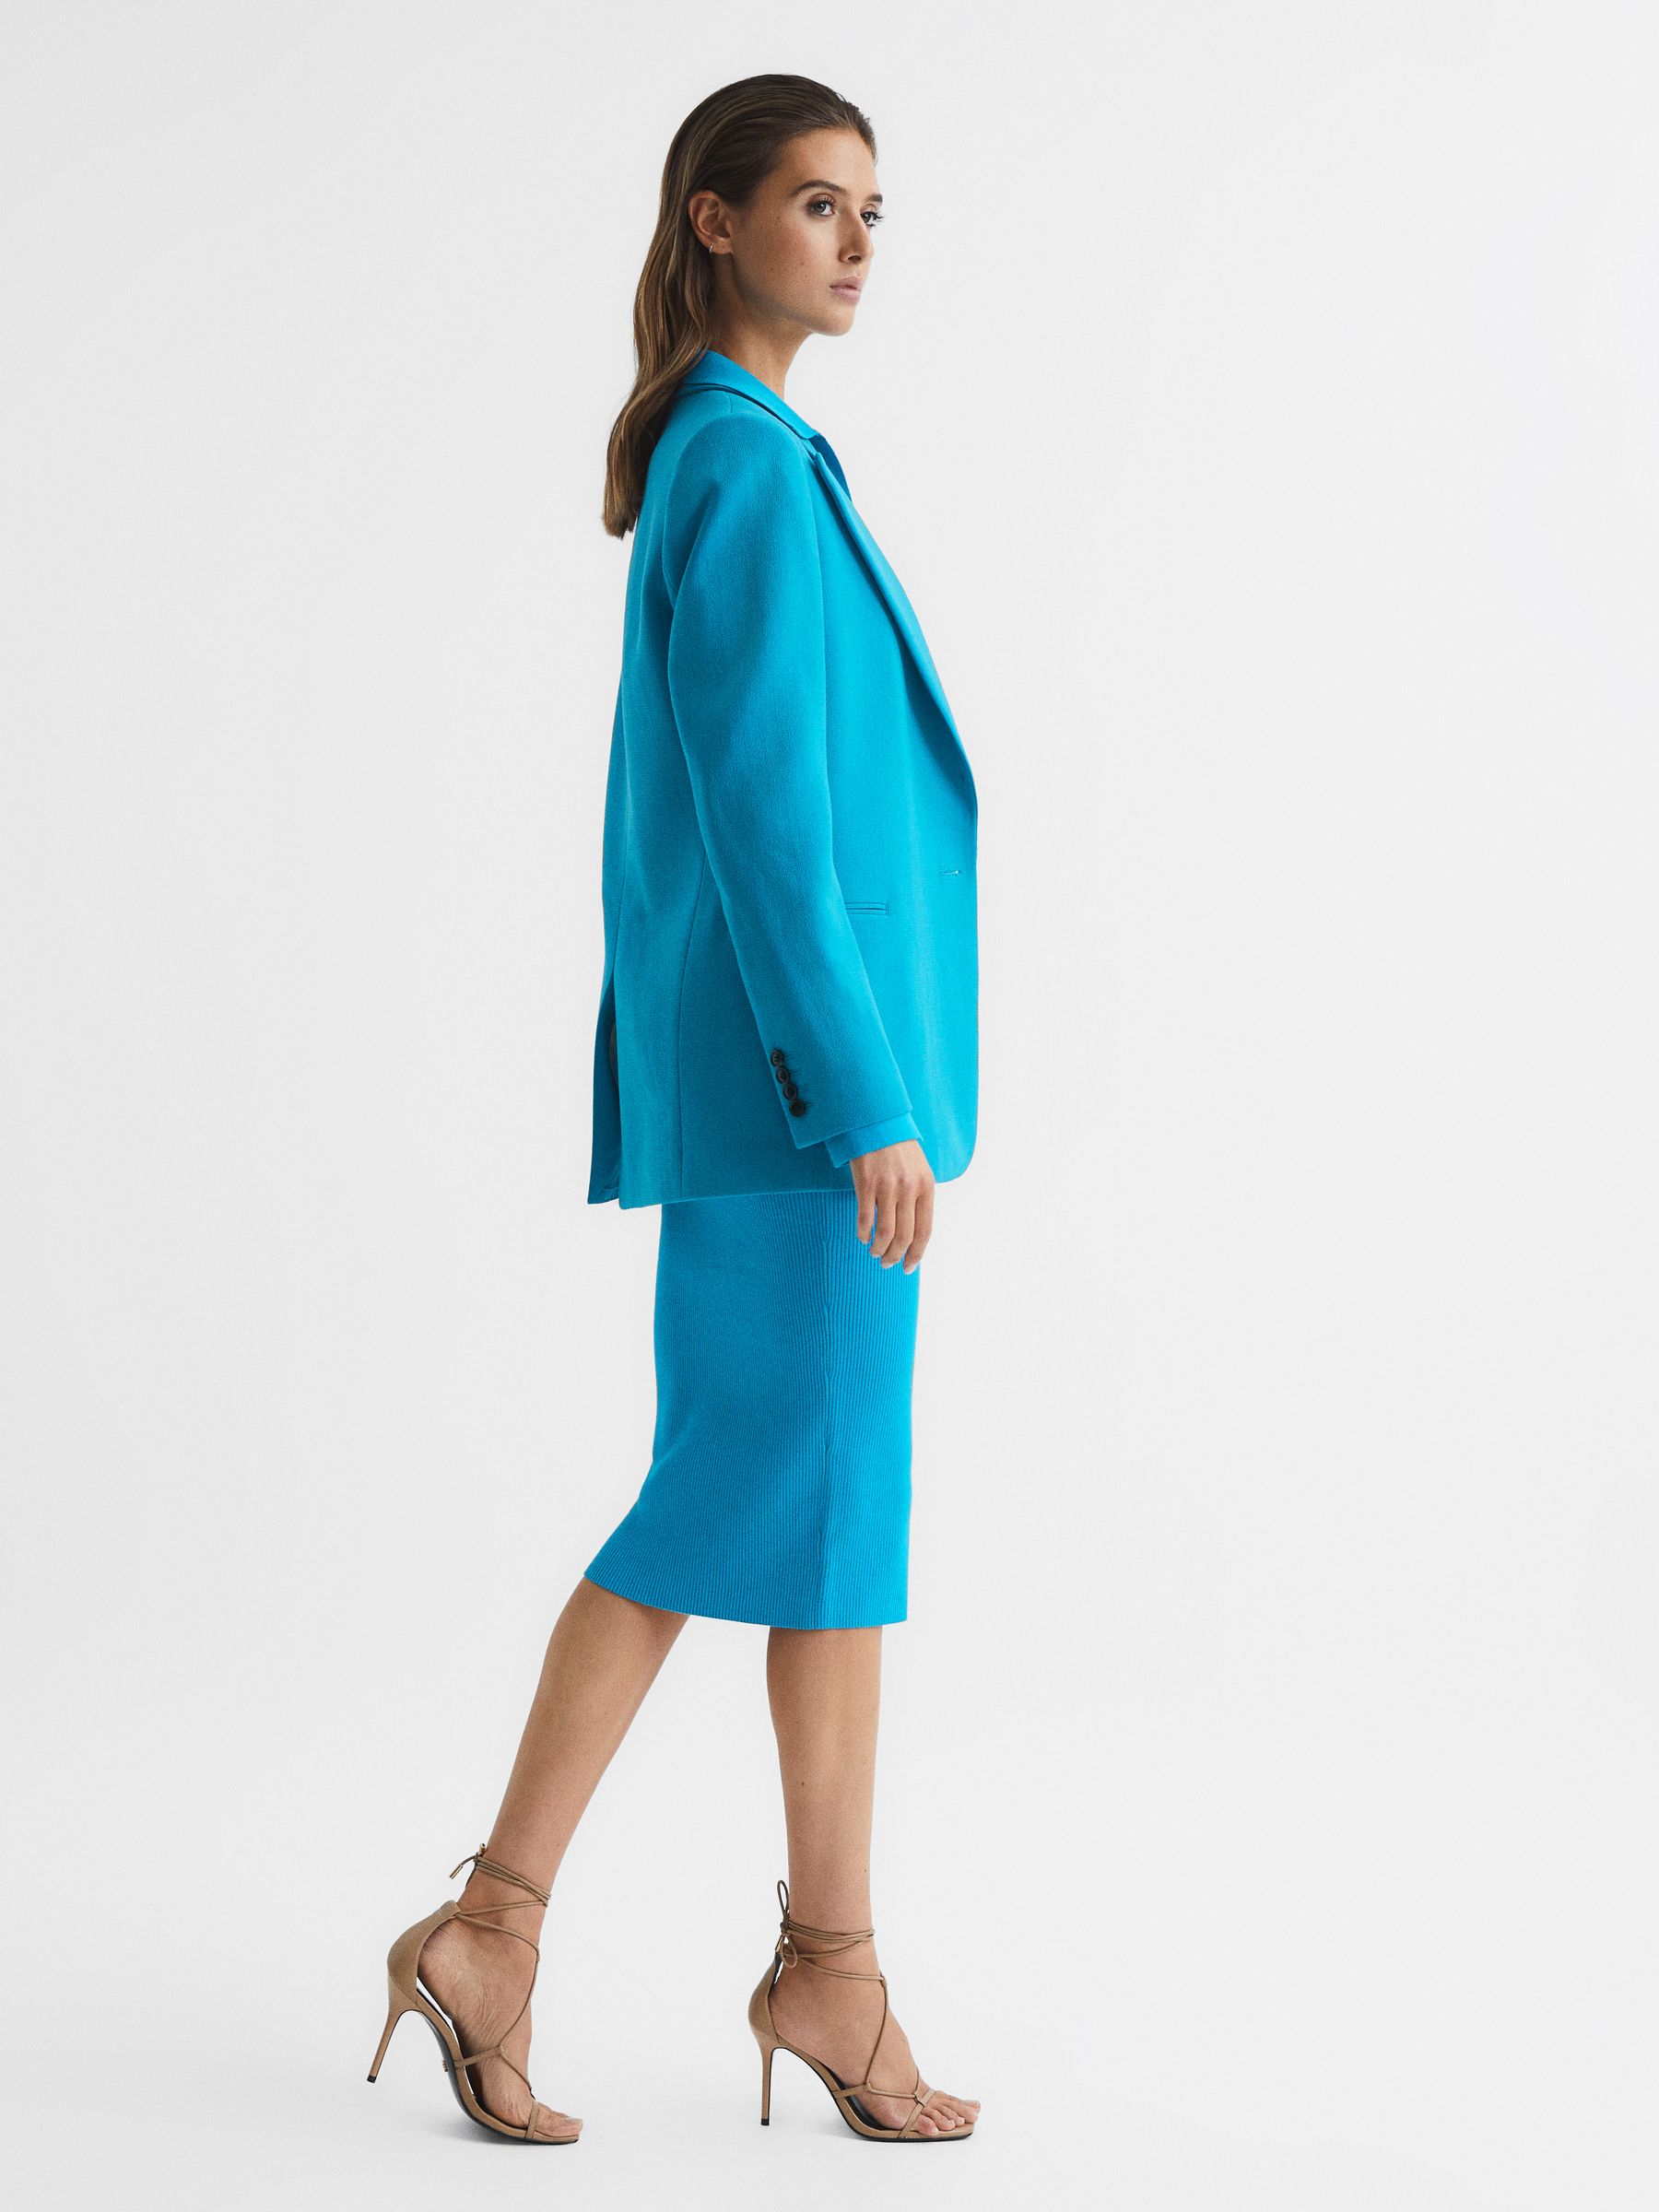 Reiss Elaina Rib-Knitted Midi Dress | REISS USA